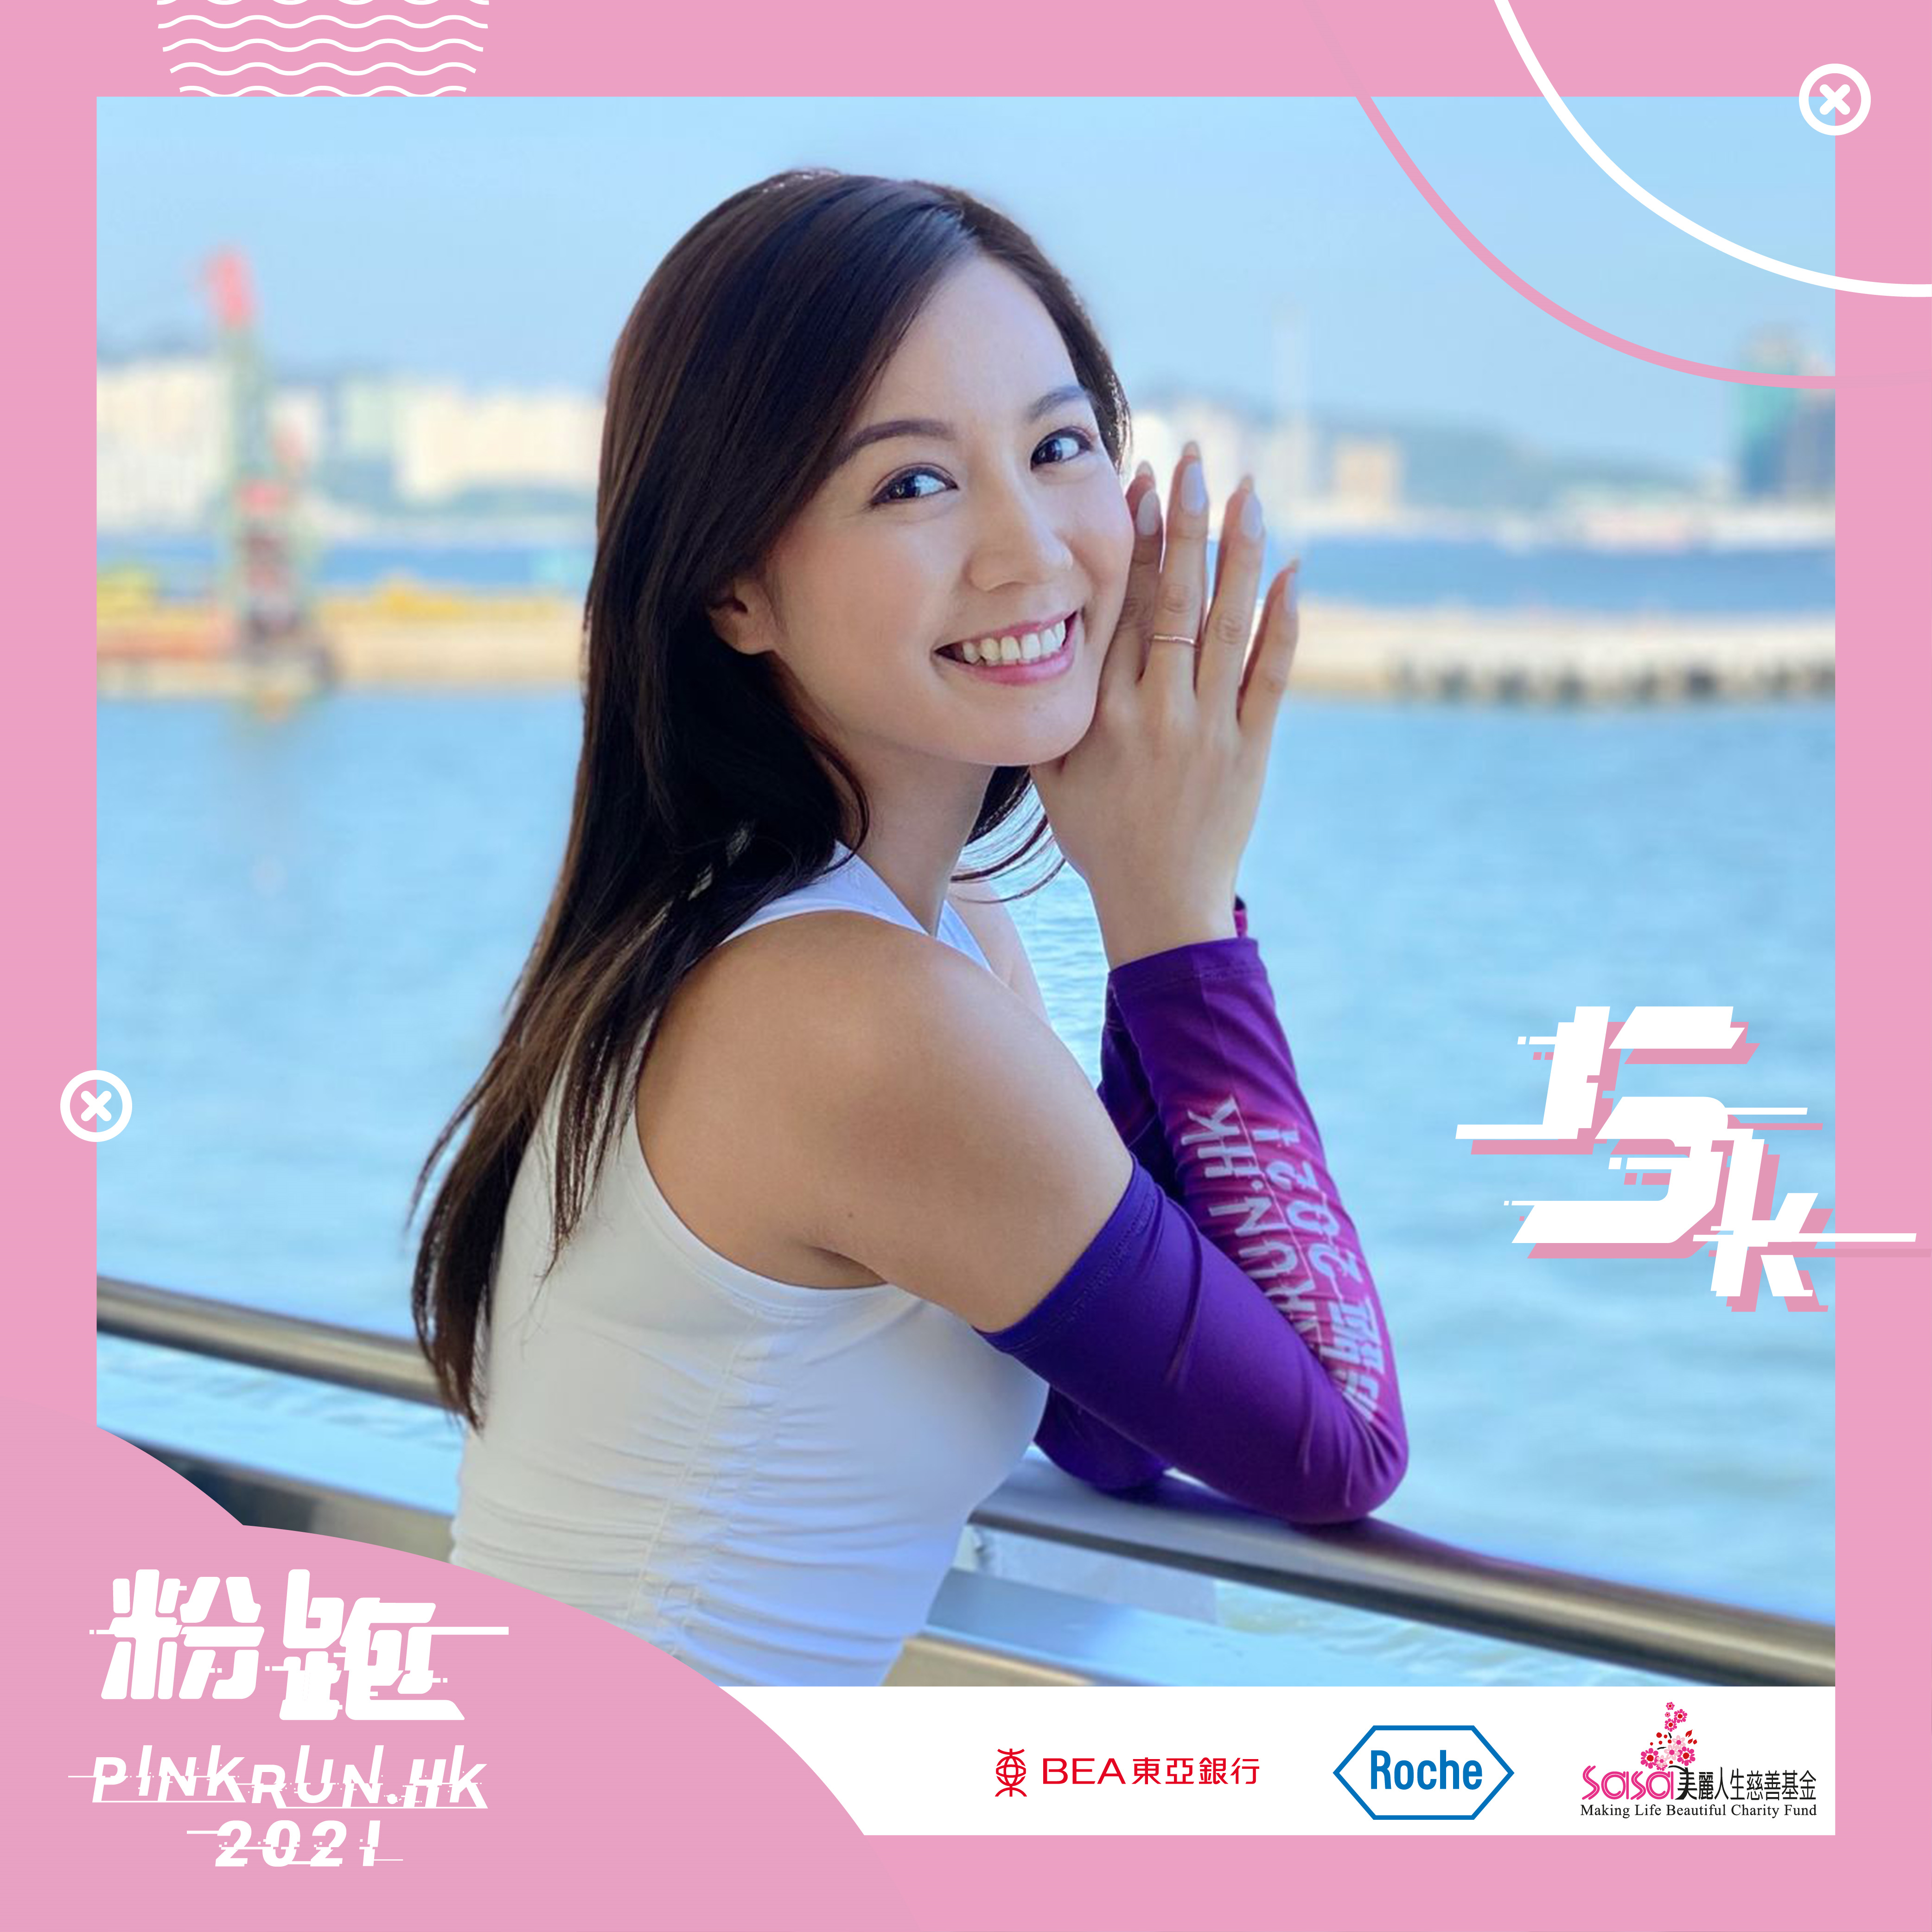 PINKRUN.HK2021 Photoframe Demo 5K